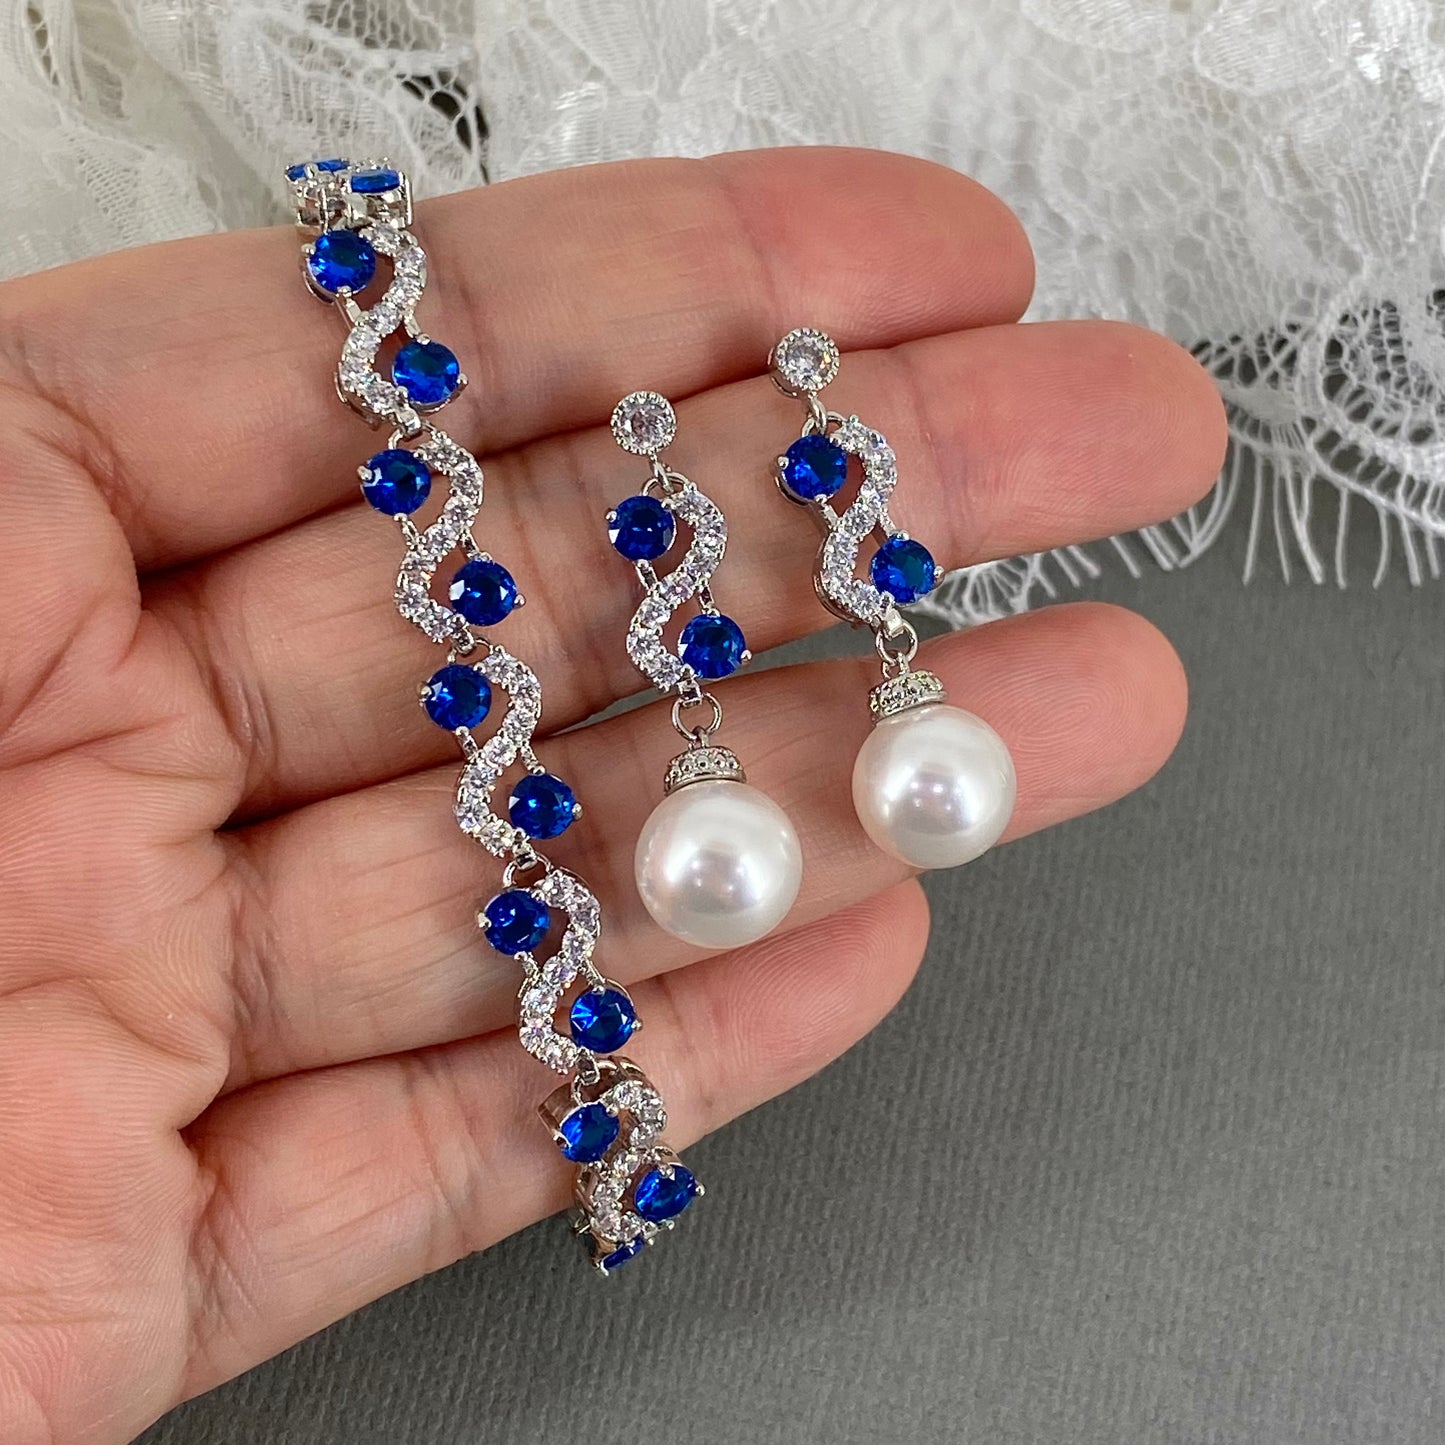 Clearance CZ Royal Blue Bracelet and Earrings Set